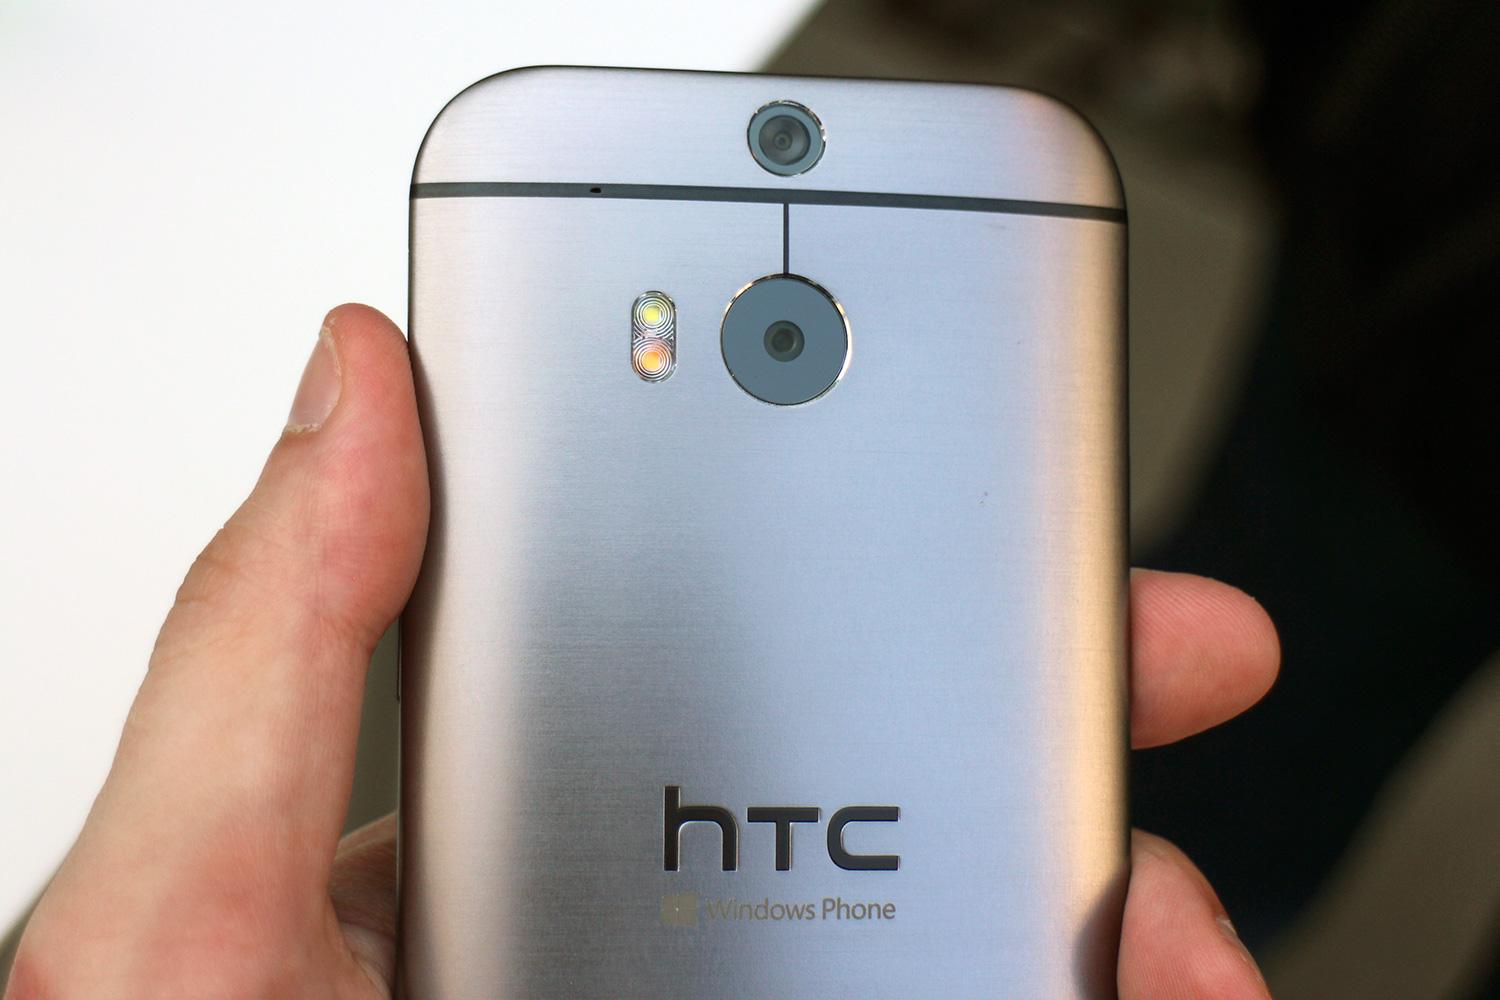 HTC One M8 with Windows